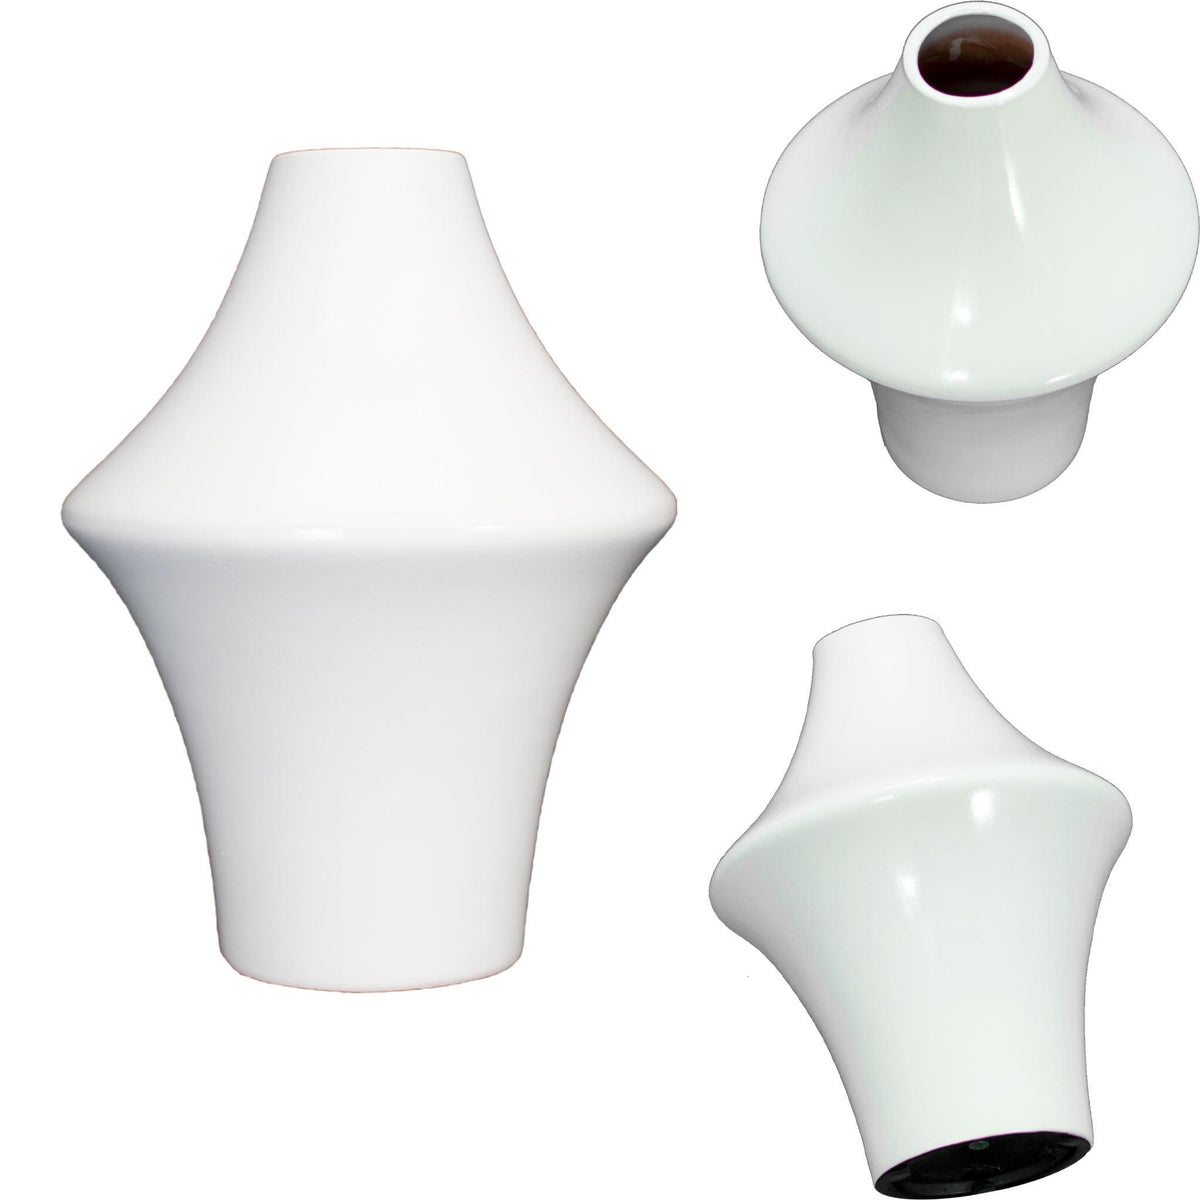 Lee Display's brand new 10in Kylix Ceramic Vase White Ceramic High Gloss Finish on sale at leedisplay.com